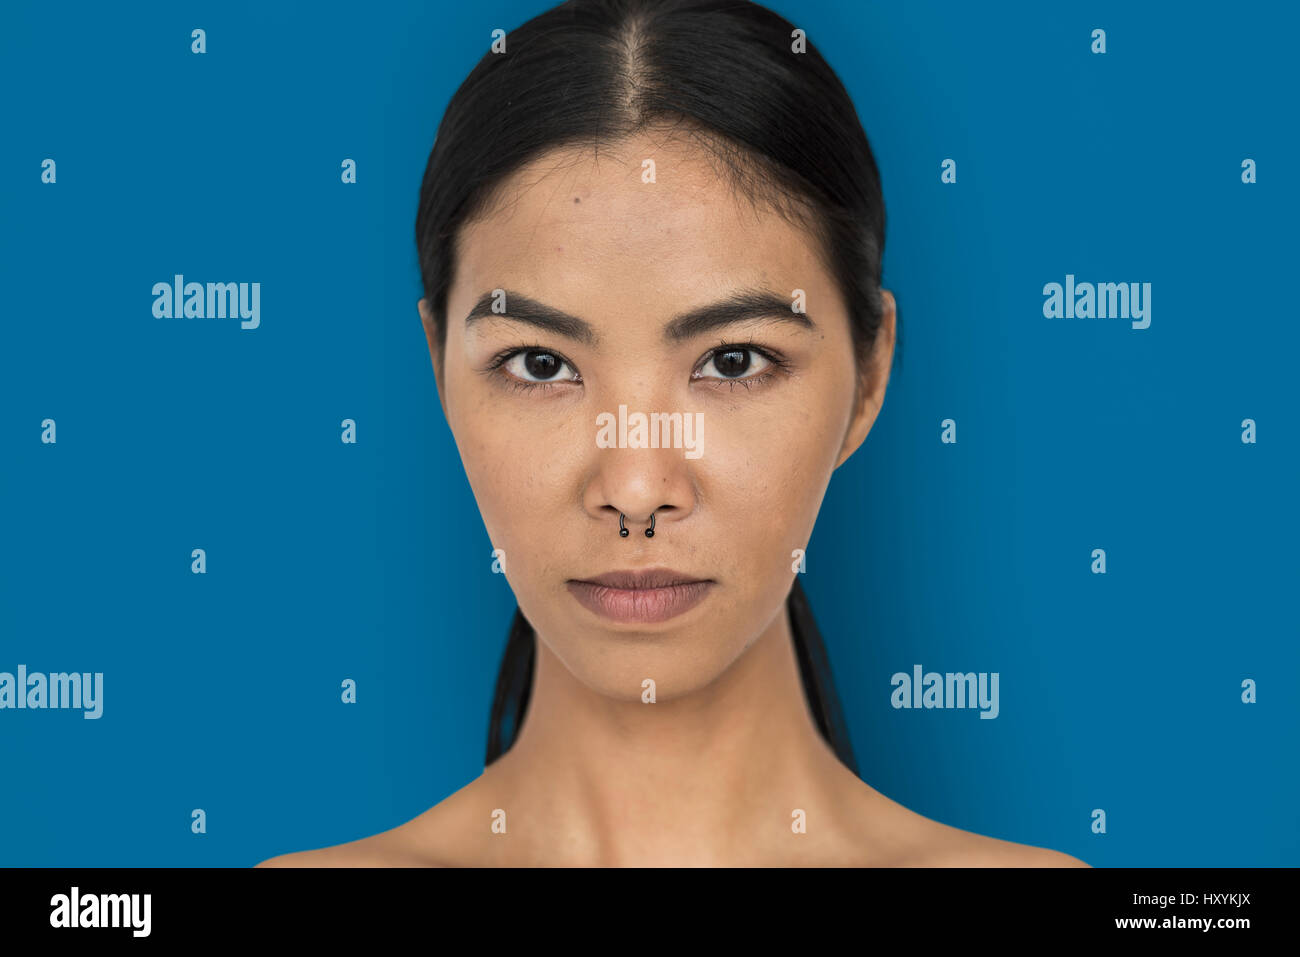 Woman Pierced Nose Ring Confidence Self Esteem Portrait Stock Photo